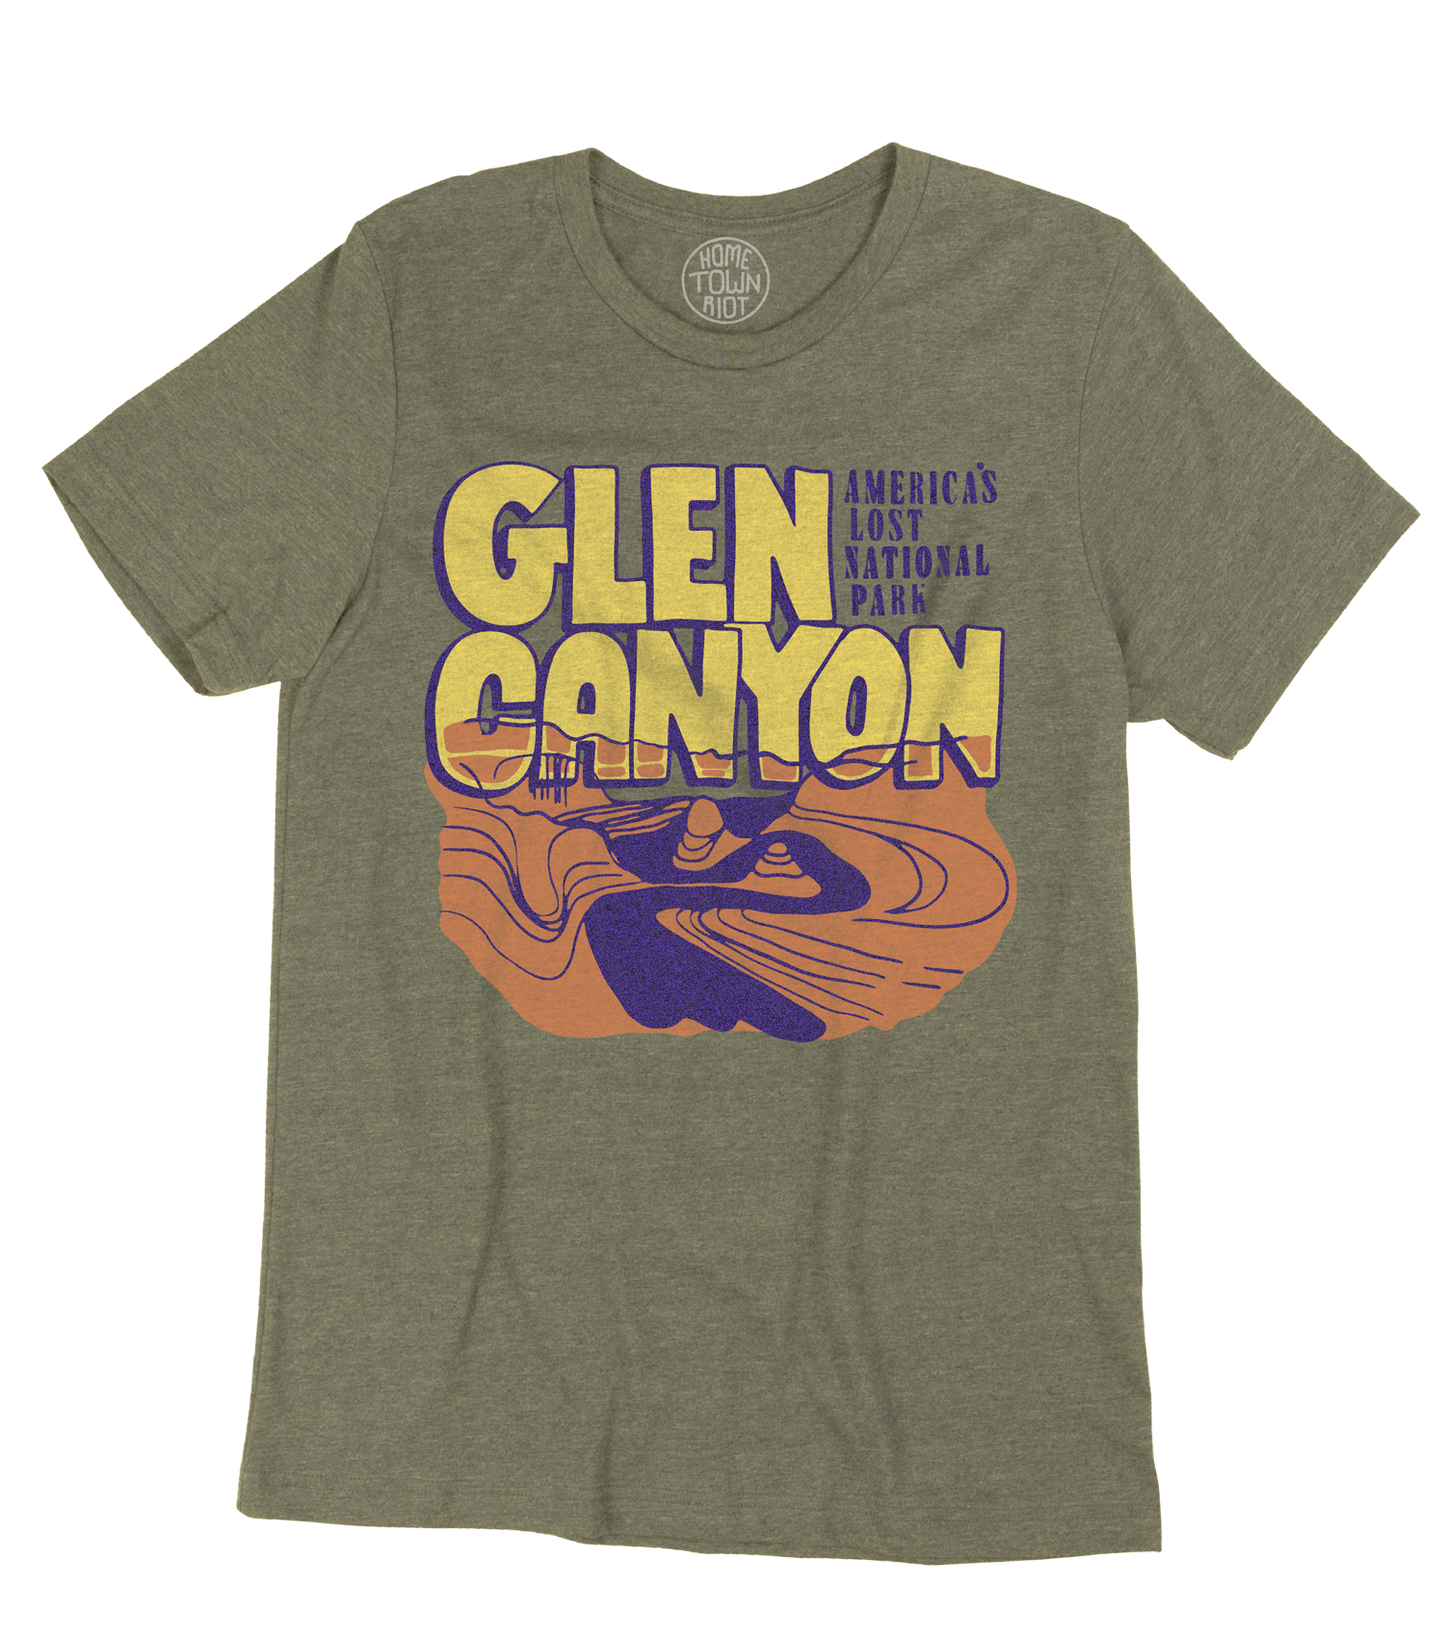 Glen Canyon Lost National Park Shirt